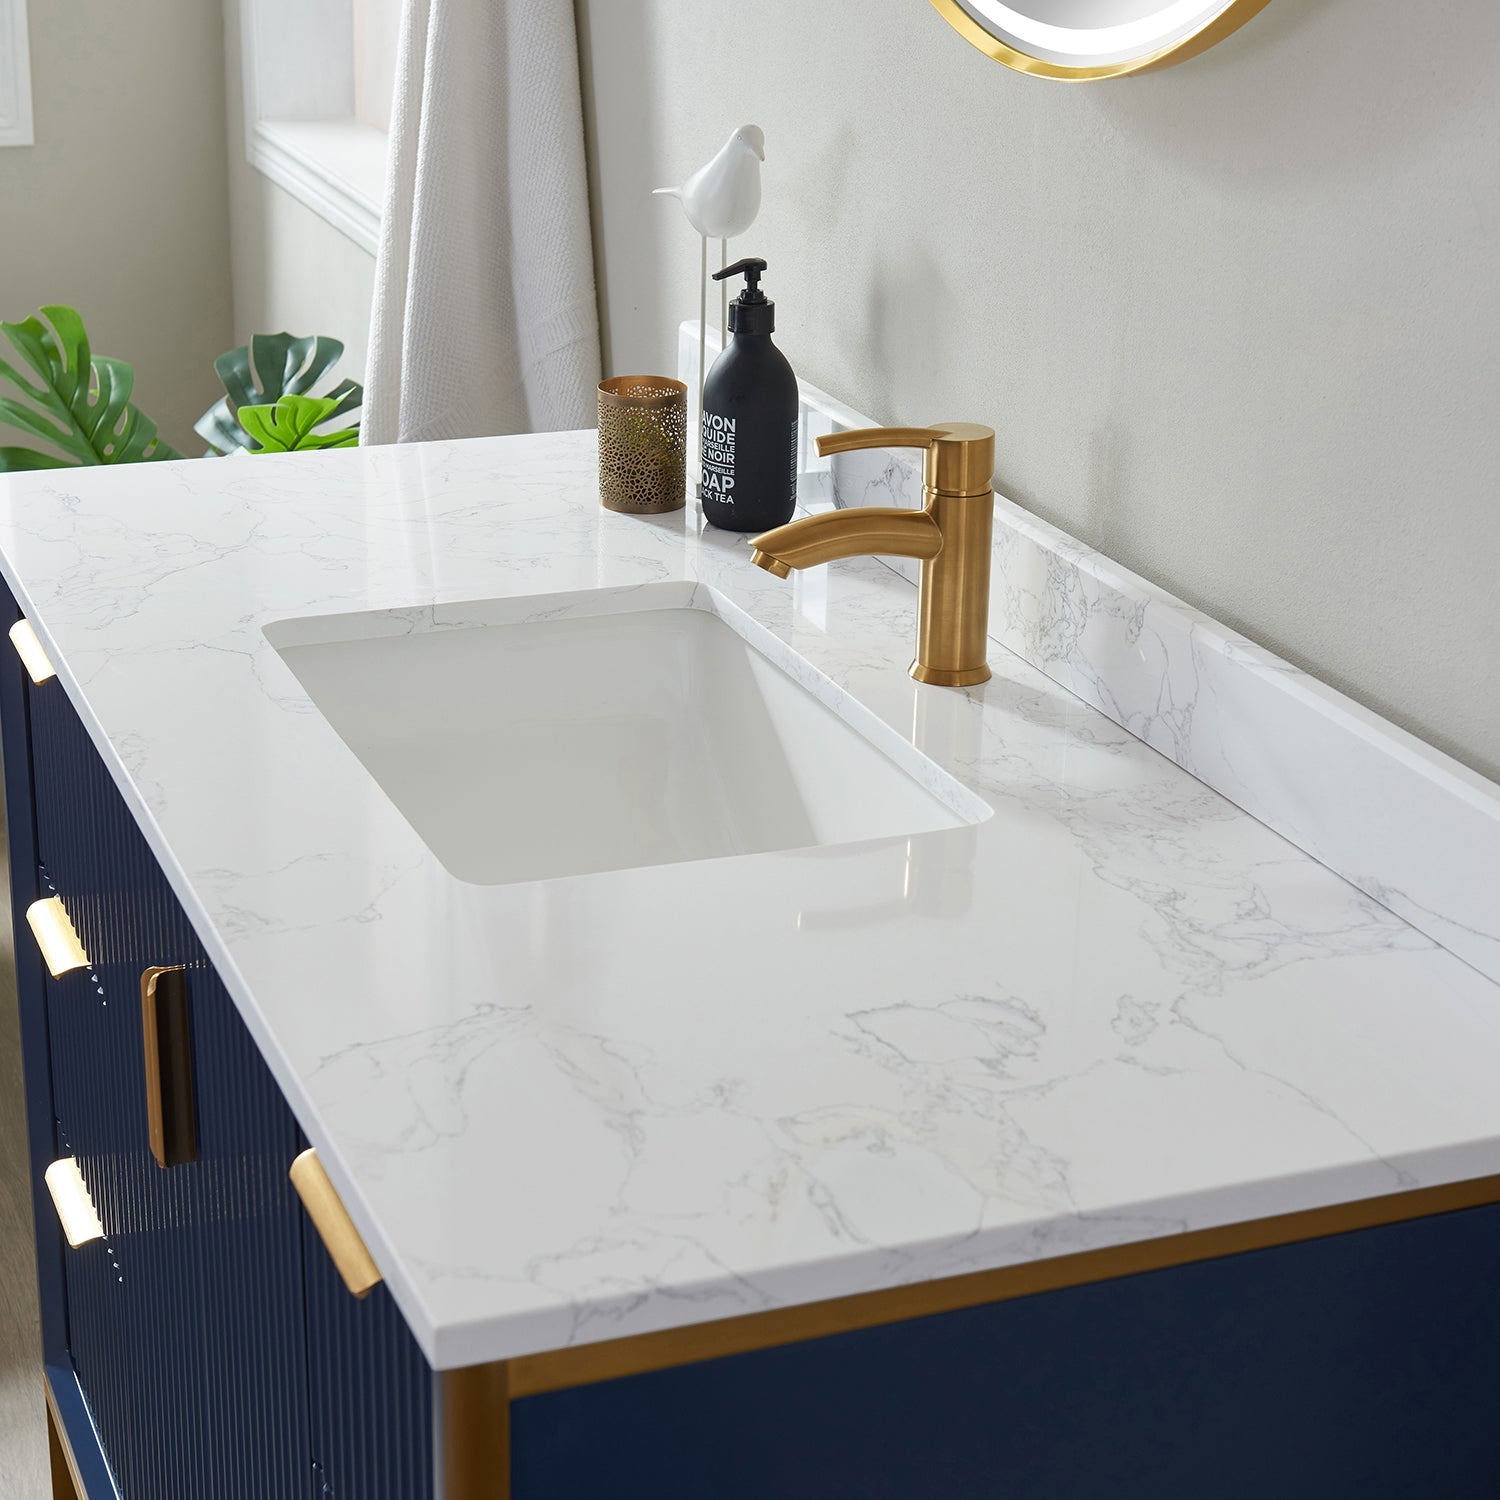 Vinnova Design Granada 48" Single Vanity in Royal Blue with White Composite Grain Stone Countertop - New Star Living